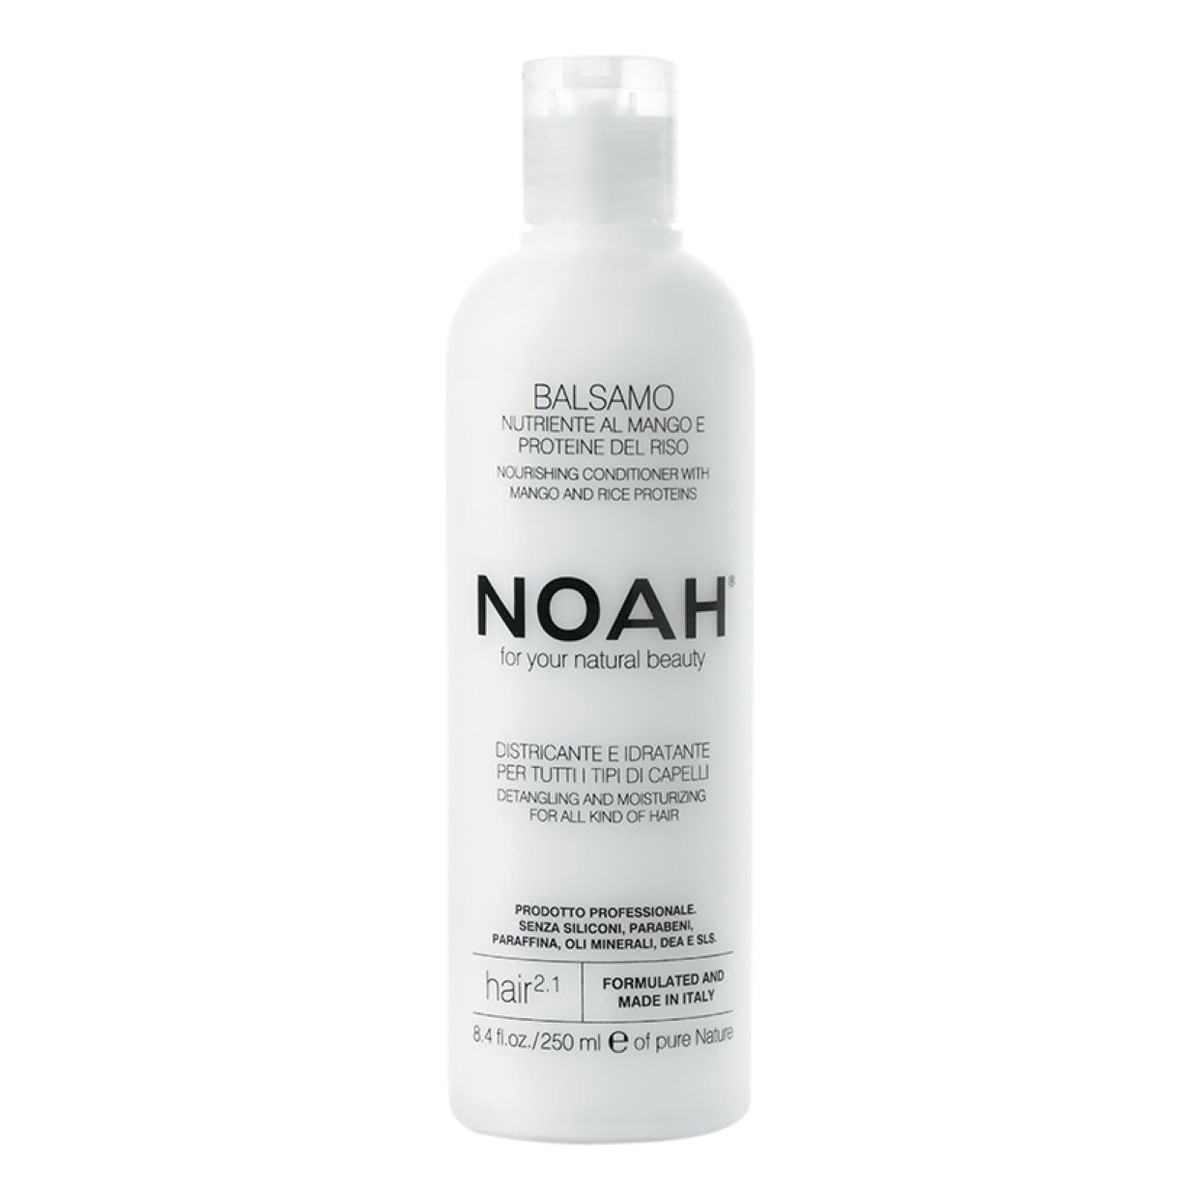 Noah For your natural beauty nourishing conditioner hair 2.1 odżywka do włosów mango & rice proteins 250ml